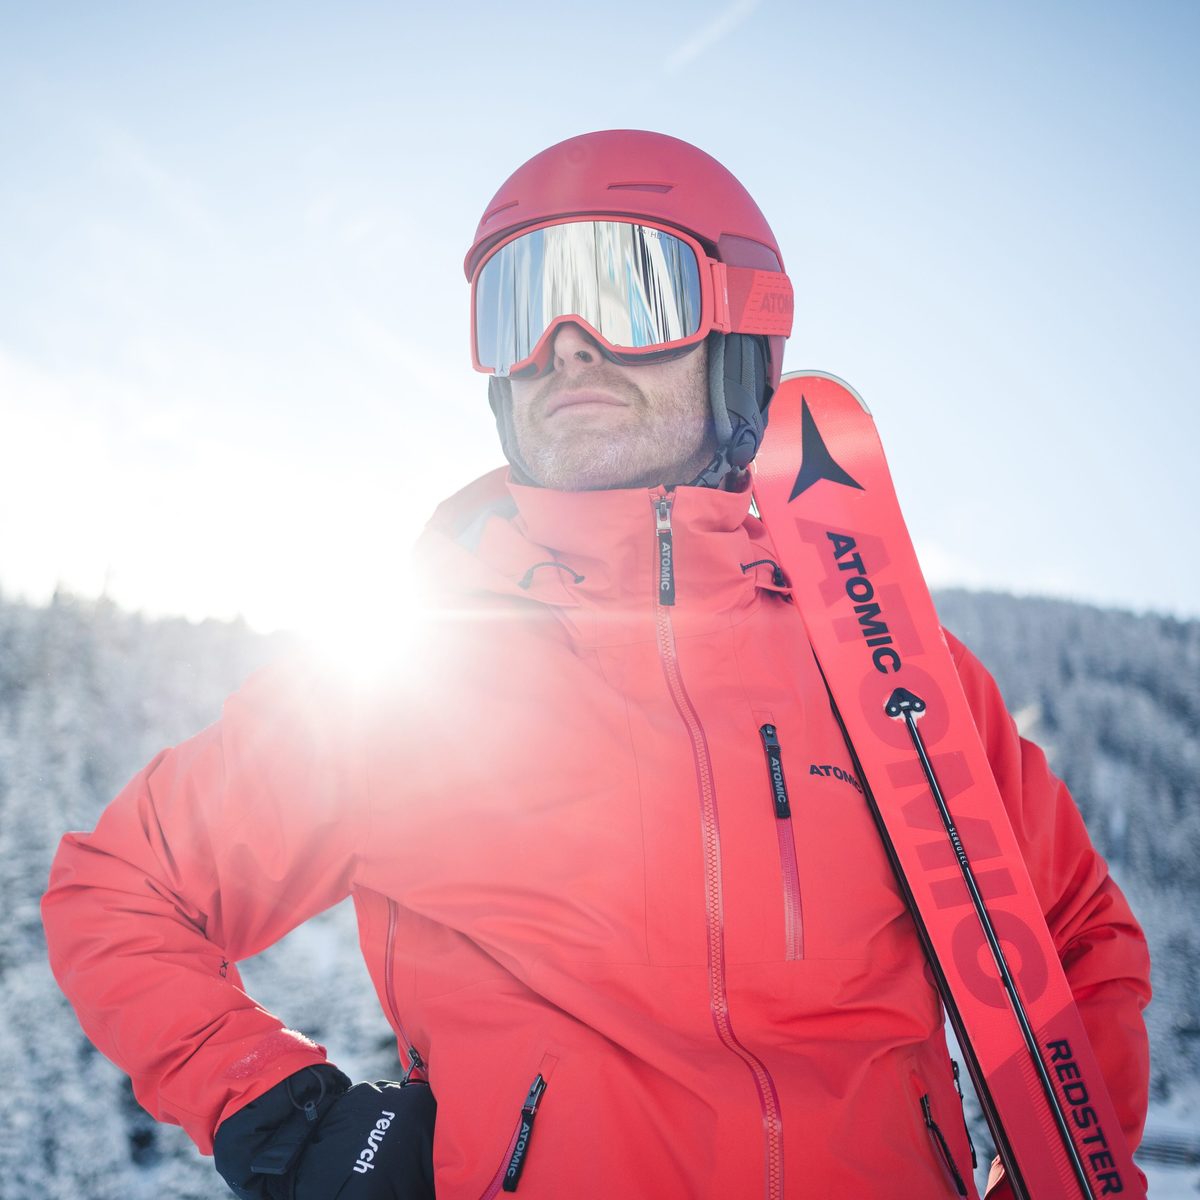 Atomic ski helmet, goggles and Redster skis